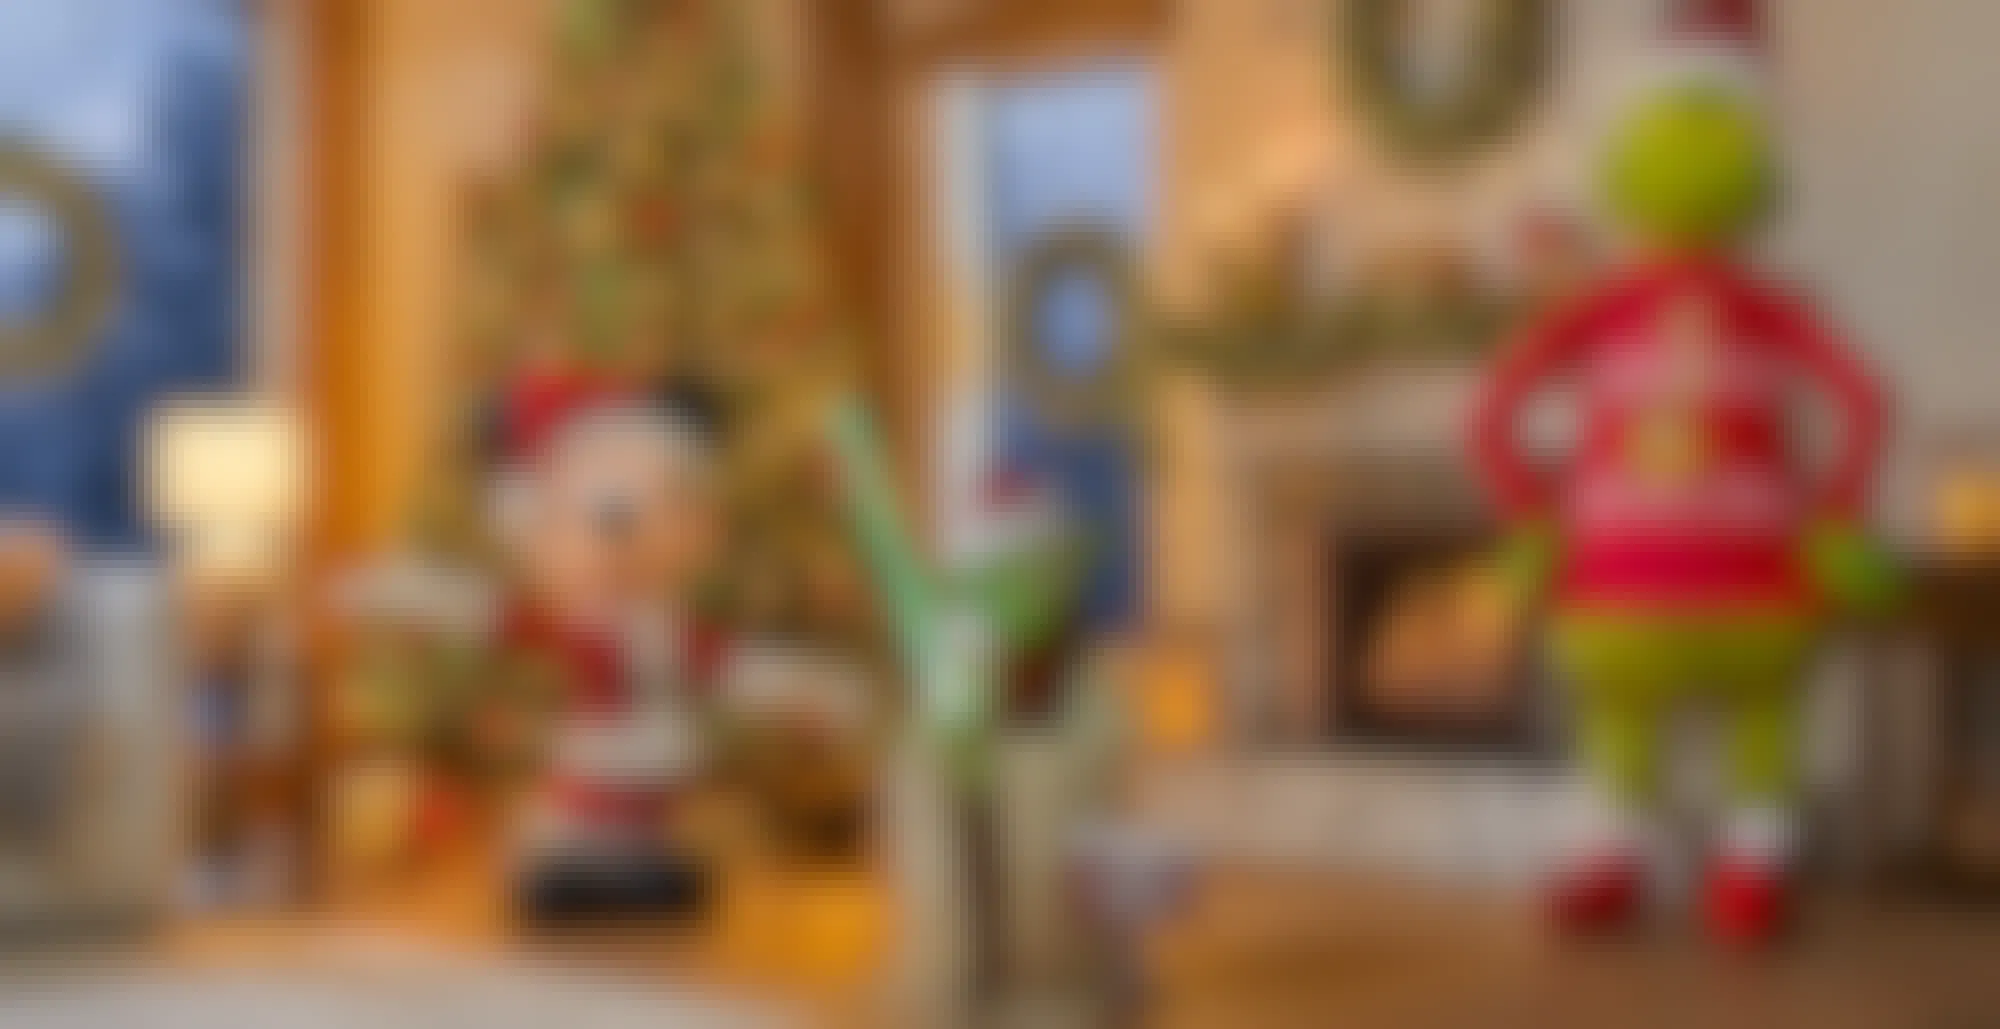 Home Depot Christmas Is Here (Already!): $199 Animated Yoda, $149 Scary Santa & More